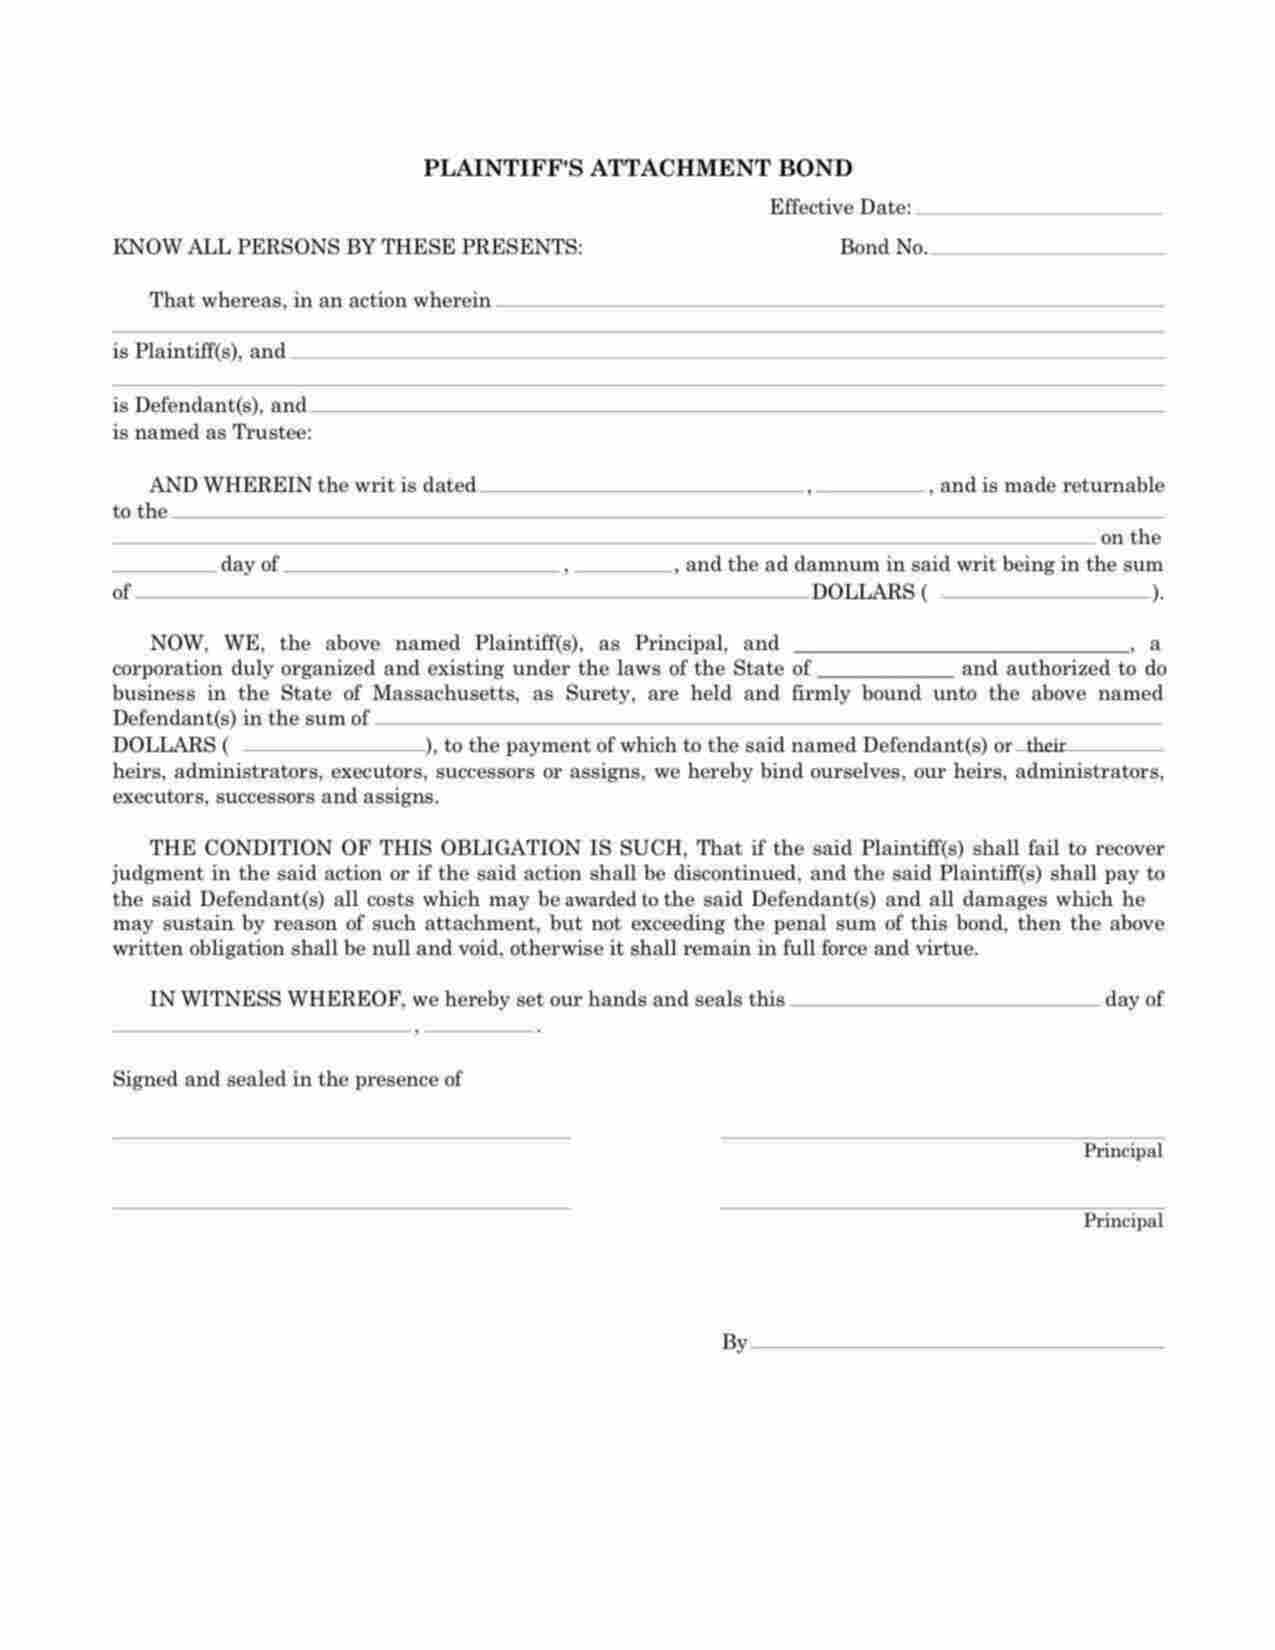 Massachusetts Plaintiffs Attachment Bond Form